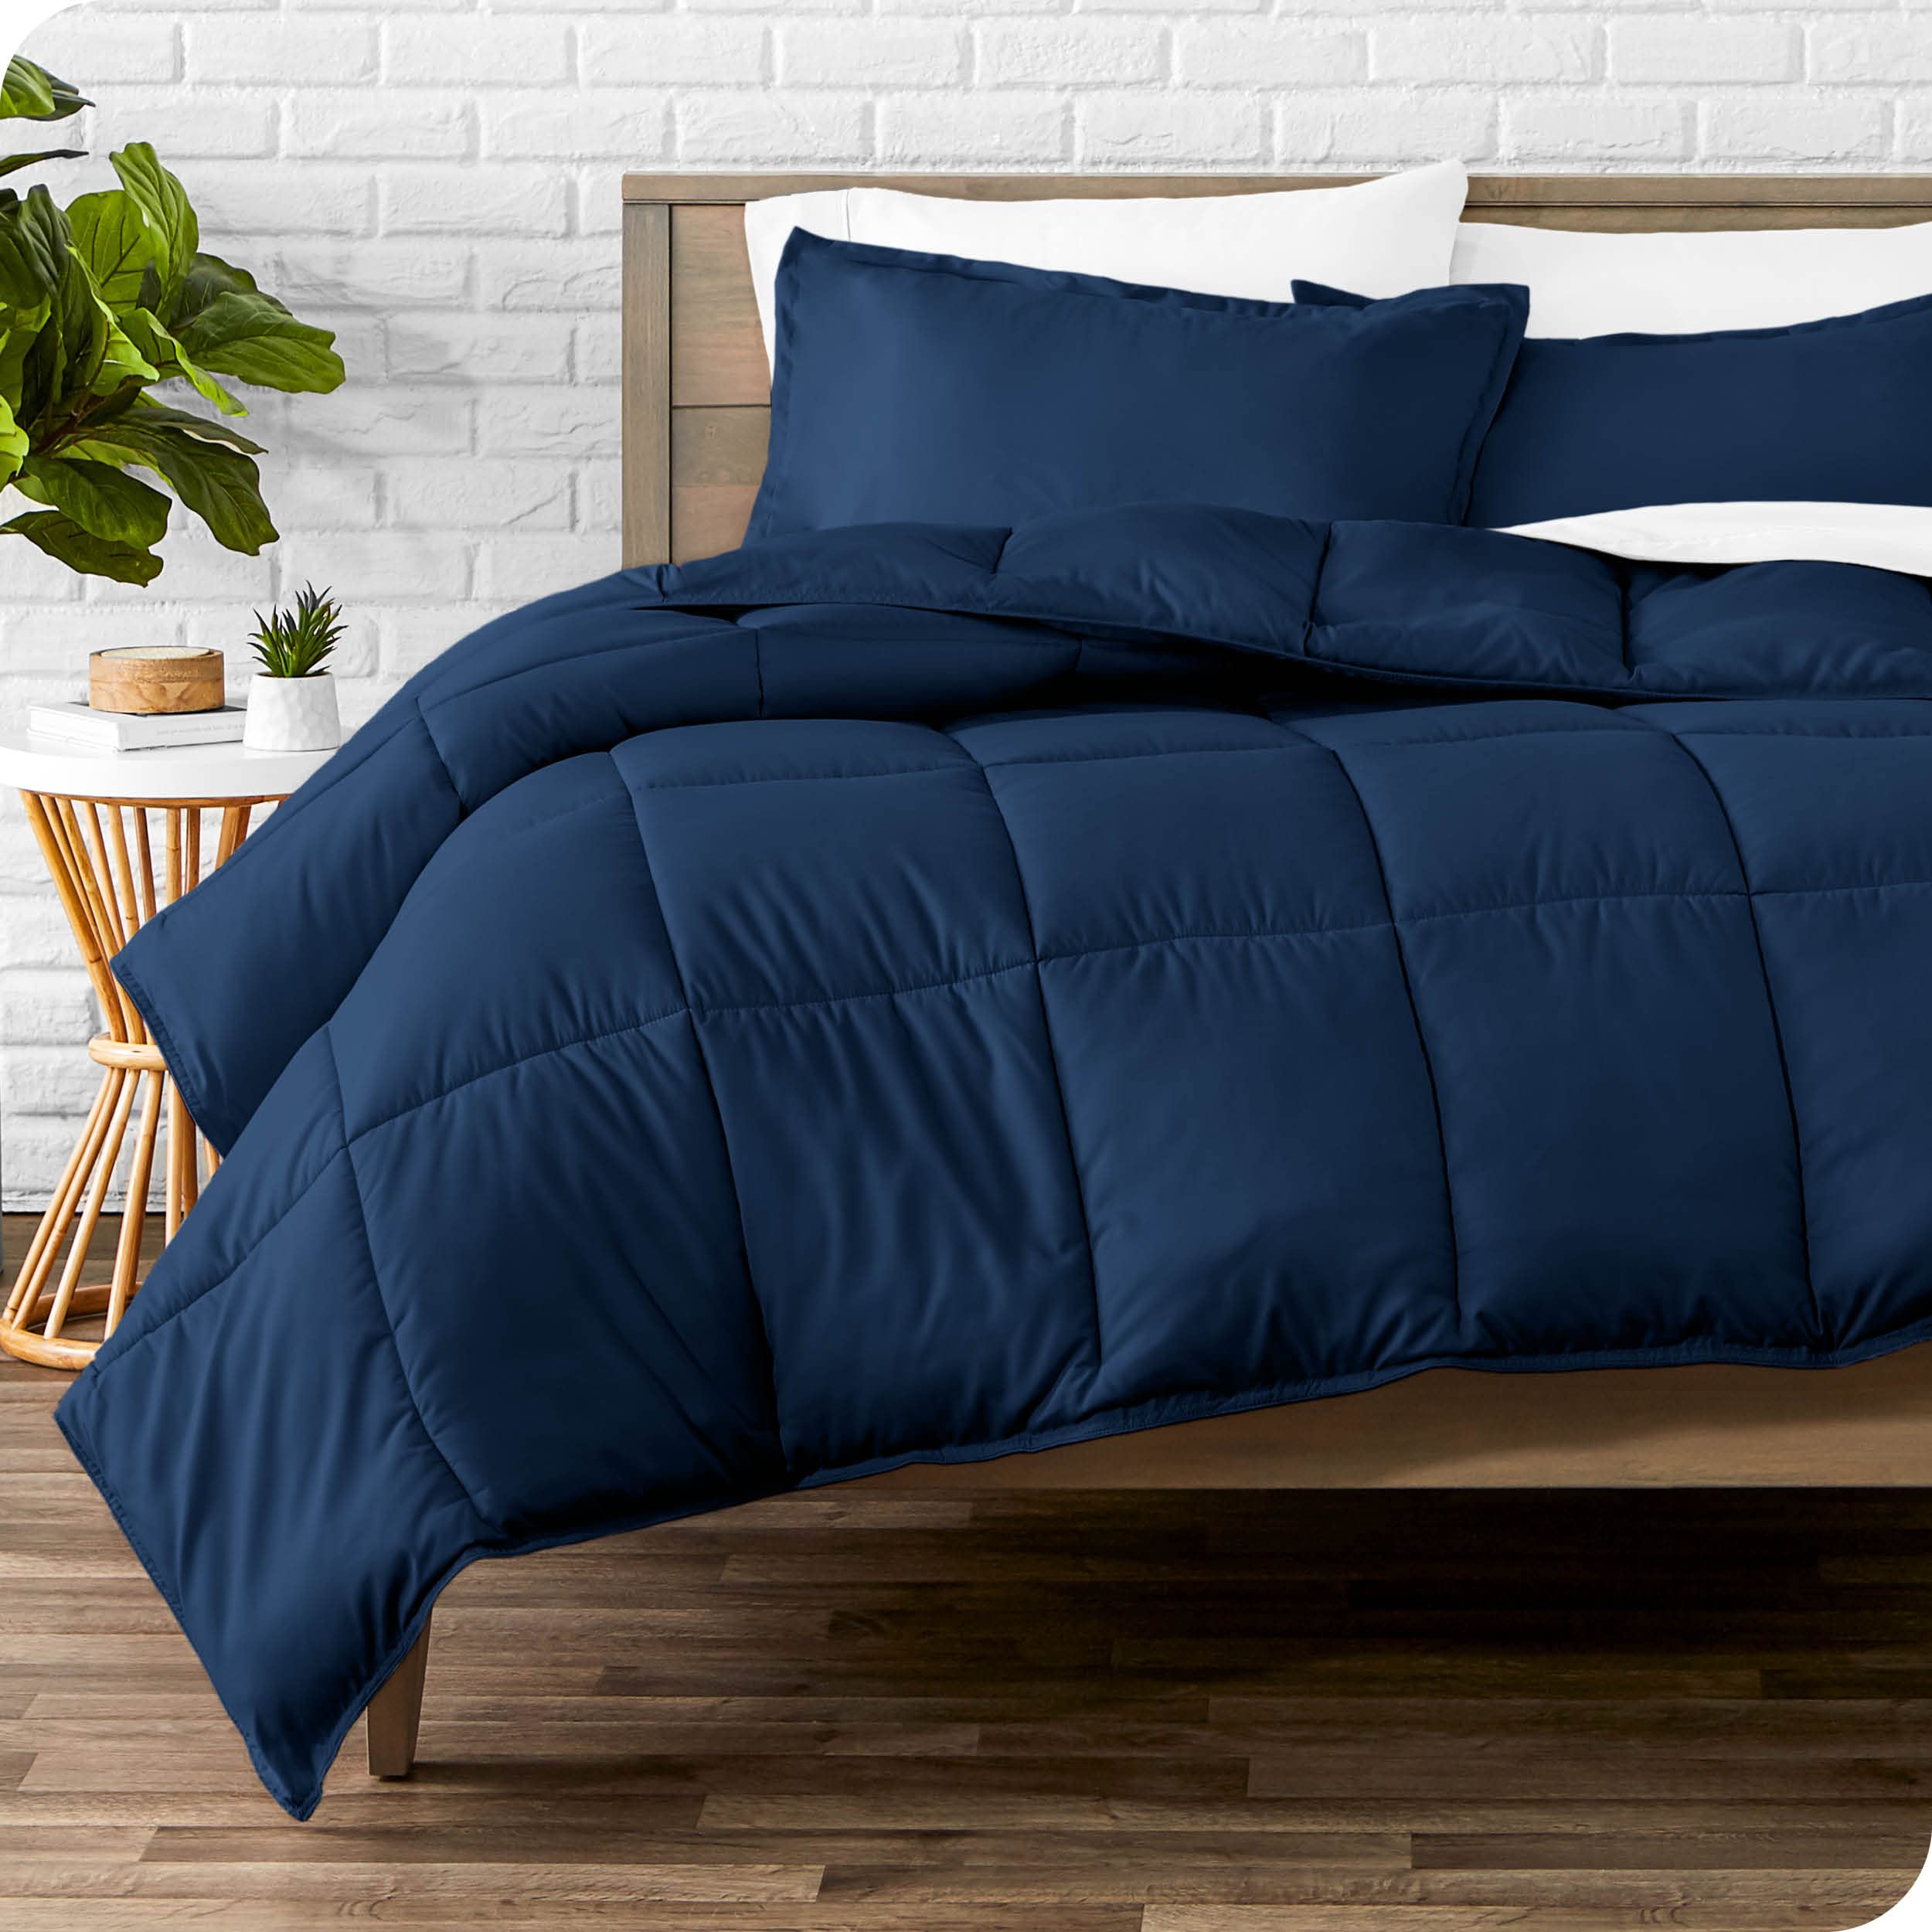 Book Cover Bare Home Comforter Set - Full Size - Ultra-Soft - Goose Down Alternative - Premium 1800 Series - All Season Warmth (Full, Dark Blue) Full 08 - Dark Blue